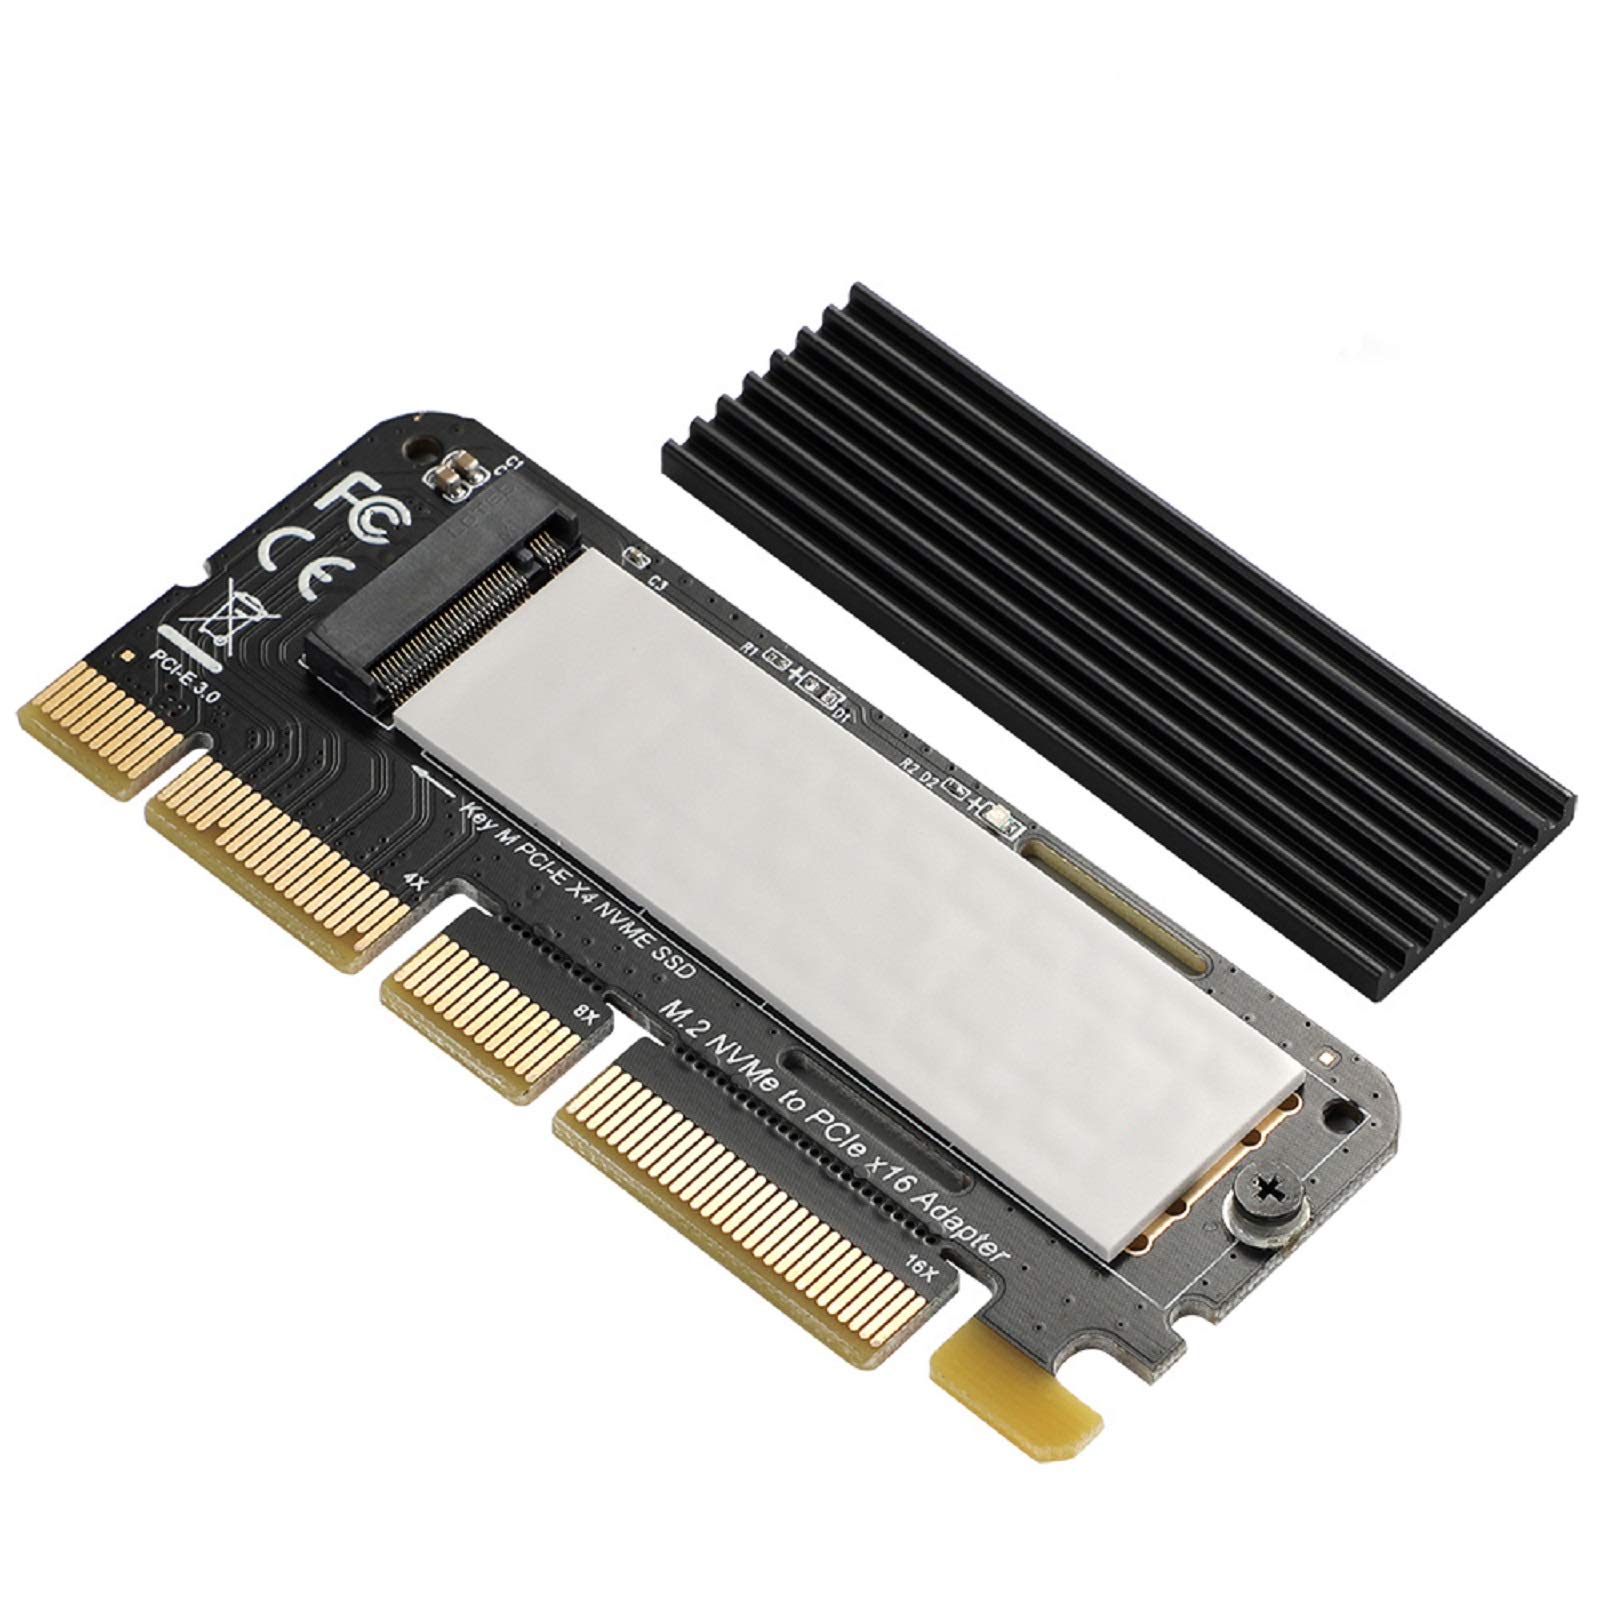 Mua BEYIMEI NVME PCIe Adapter,  NVME SSD to PCI Express Adapter with  Heatsink Supports PCIe x4 x8 x16, Supports  M Key SSD 2230 2242 2260  2280 trên Amazon Đức chính hãng 2023 | Giaonhan247